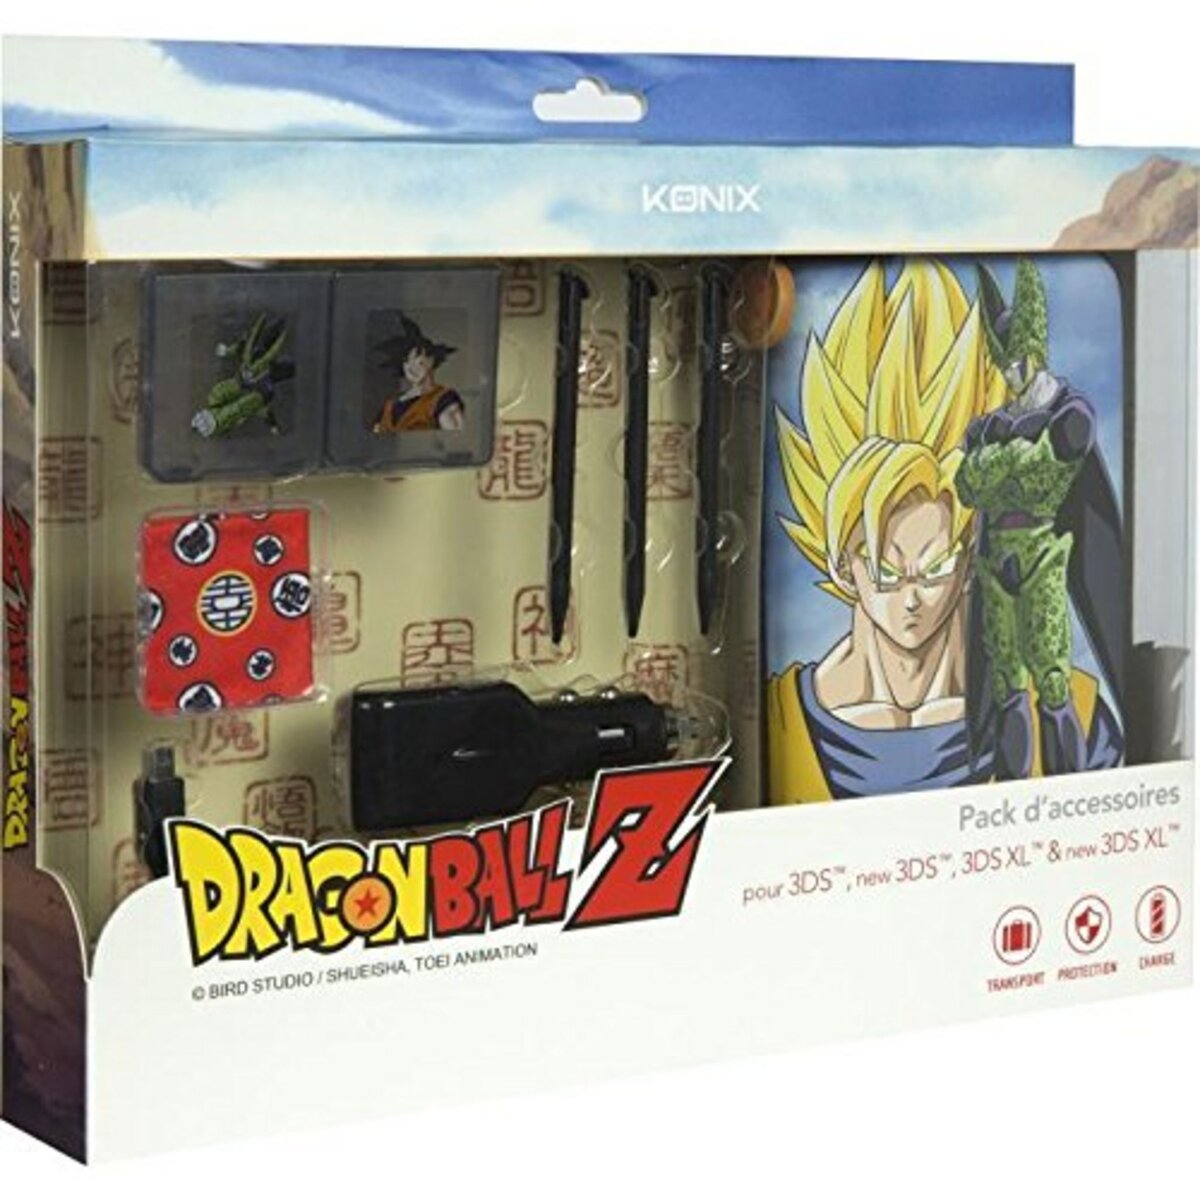 PACK d'Accessoires Dragons BALL Z console compatible N3DS